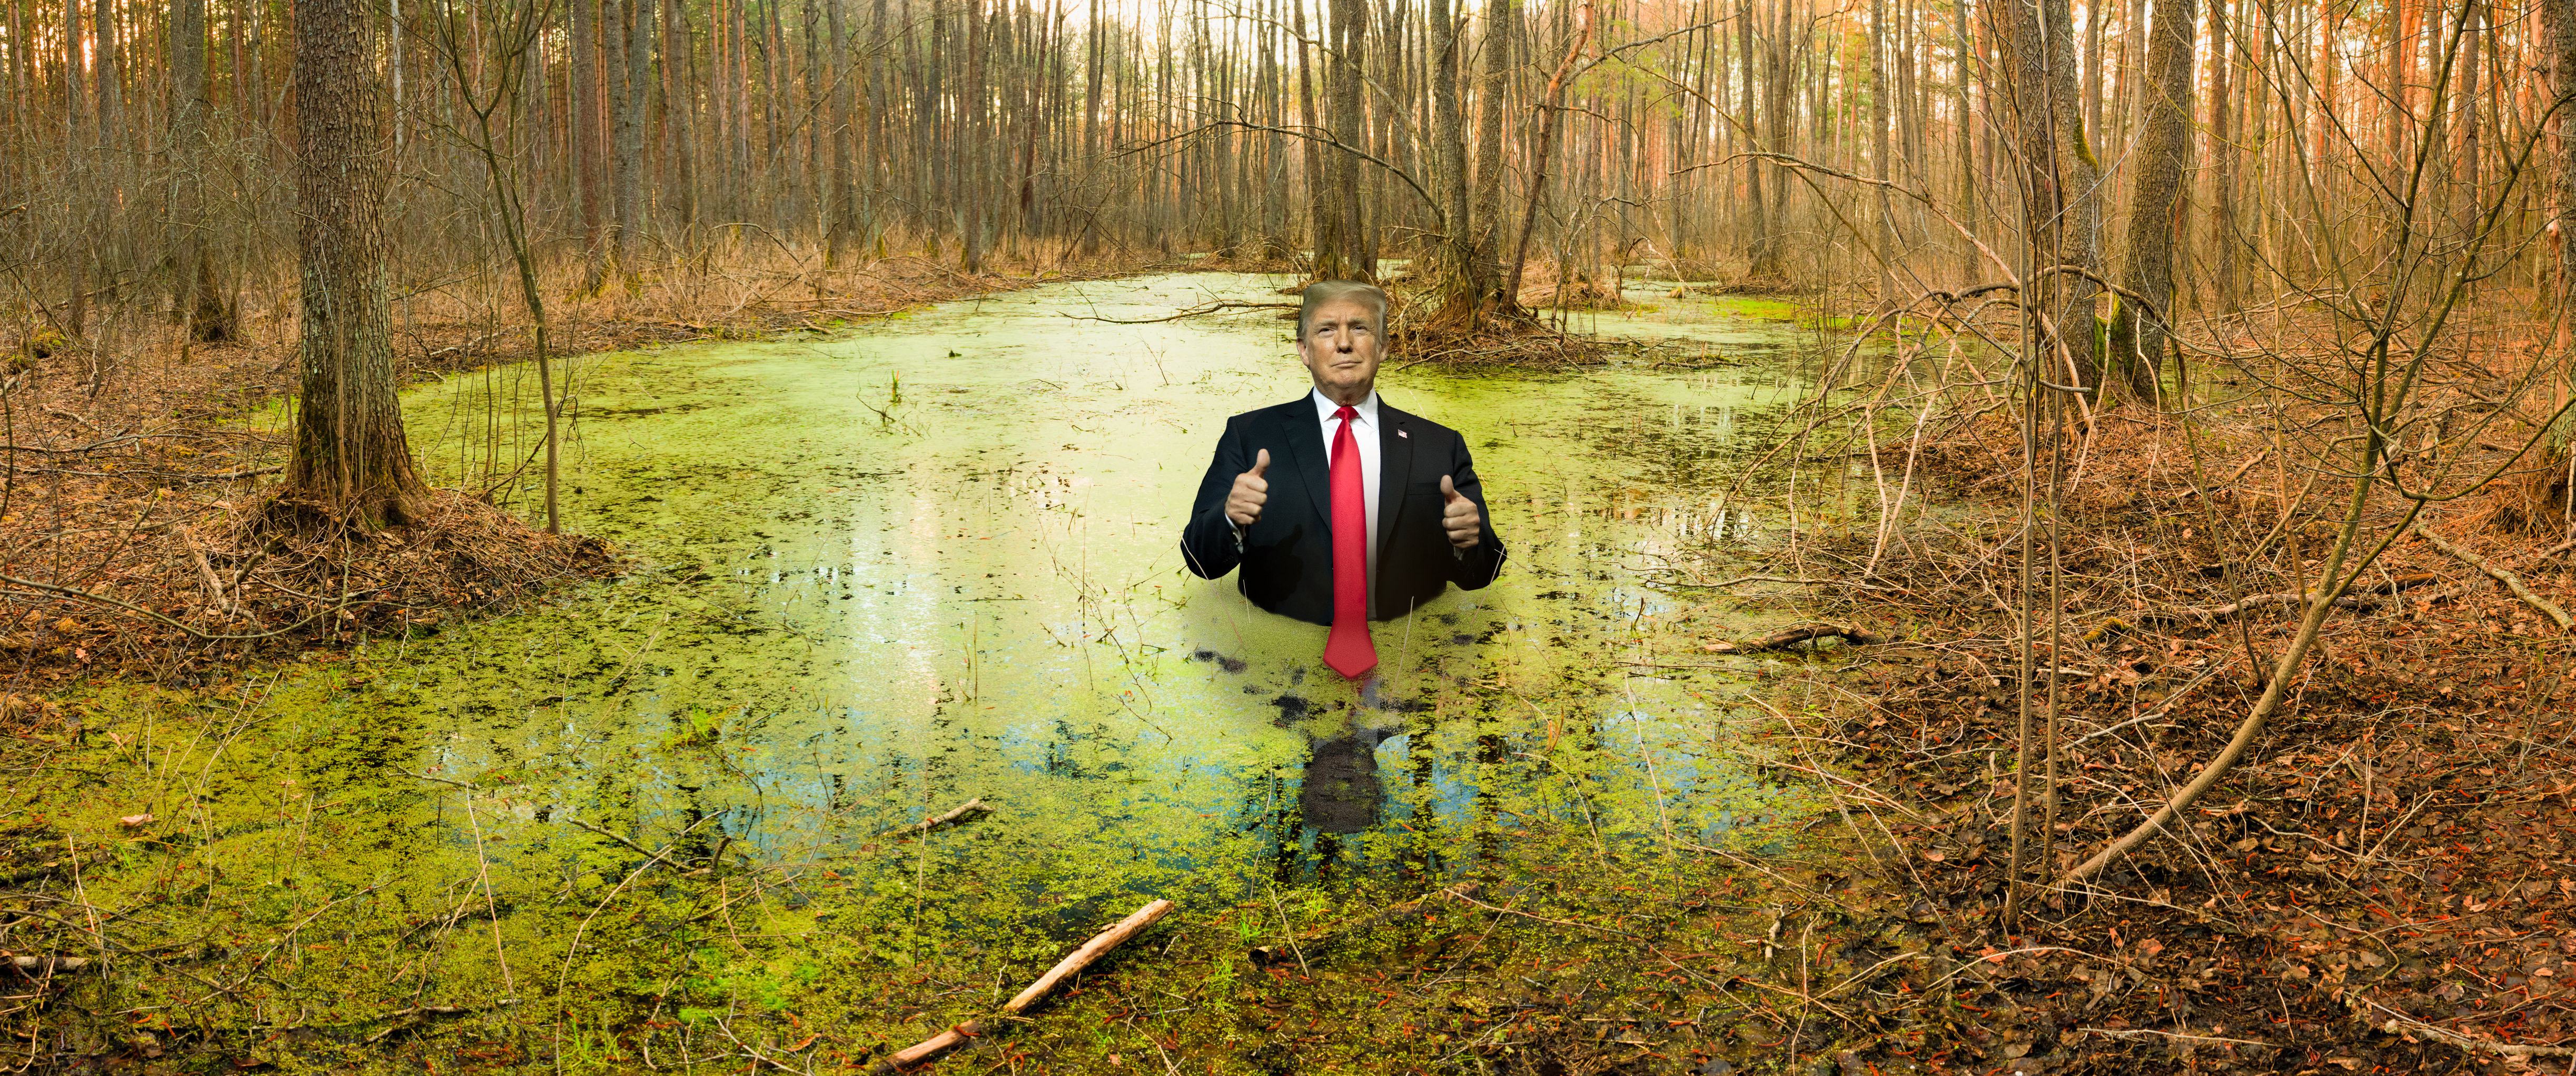 trump_swamp.jpg